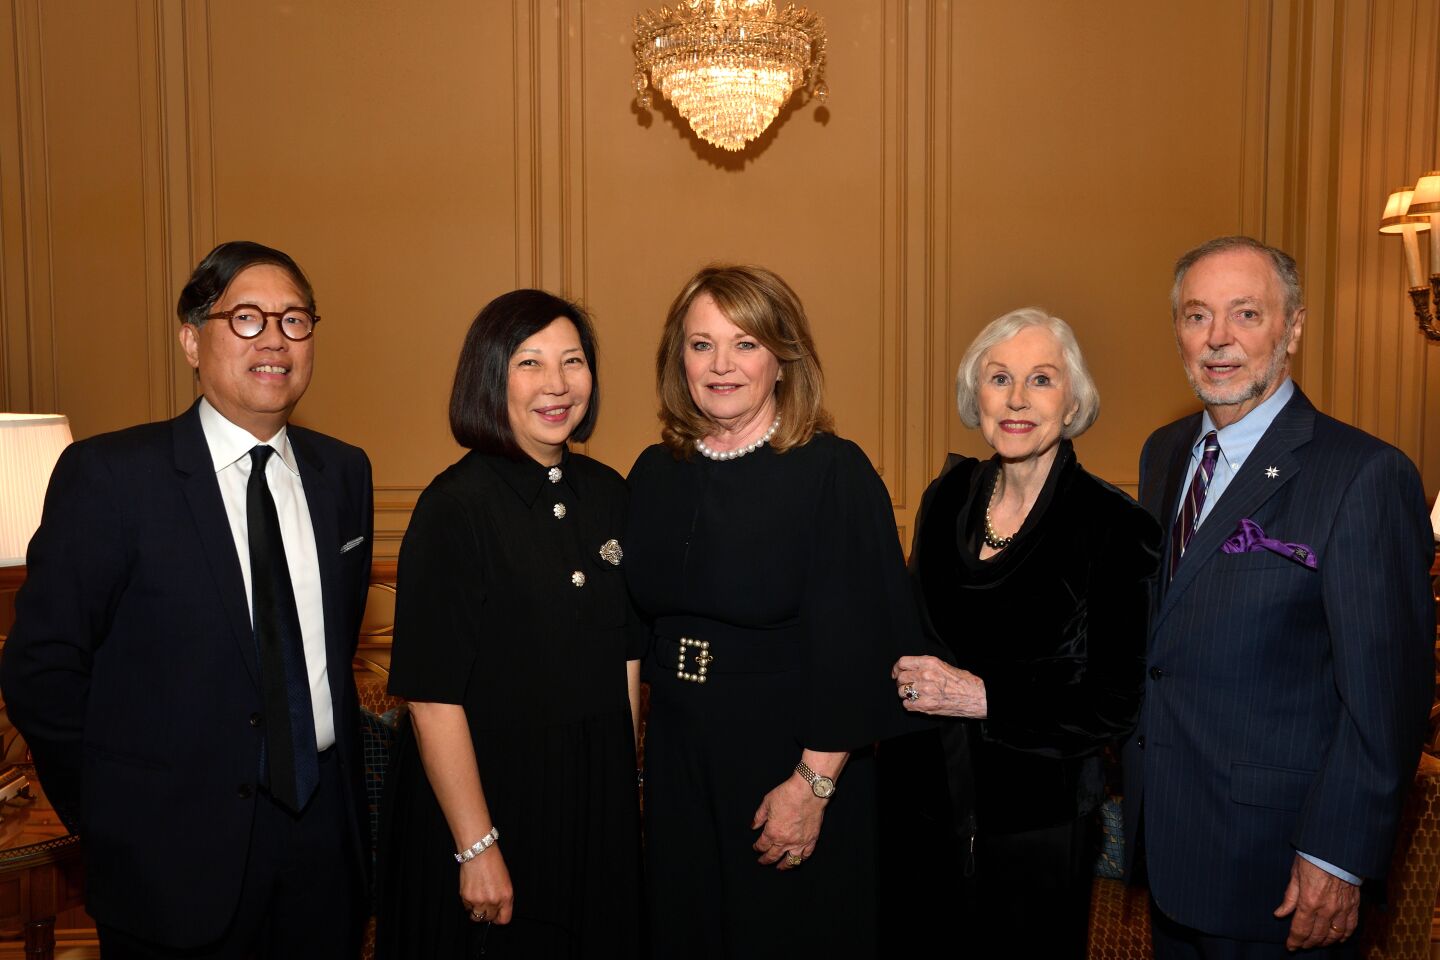 Joseph Wong, Vivian Lim, Debbie Turner and Armi and Al Williams